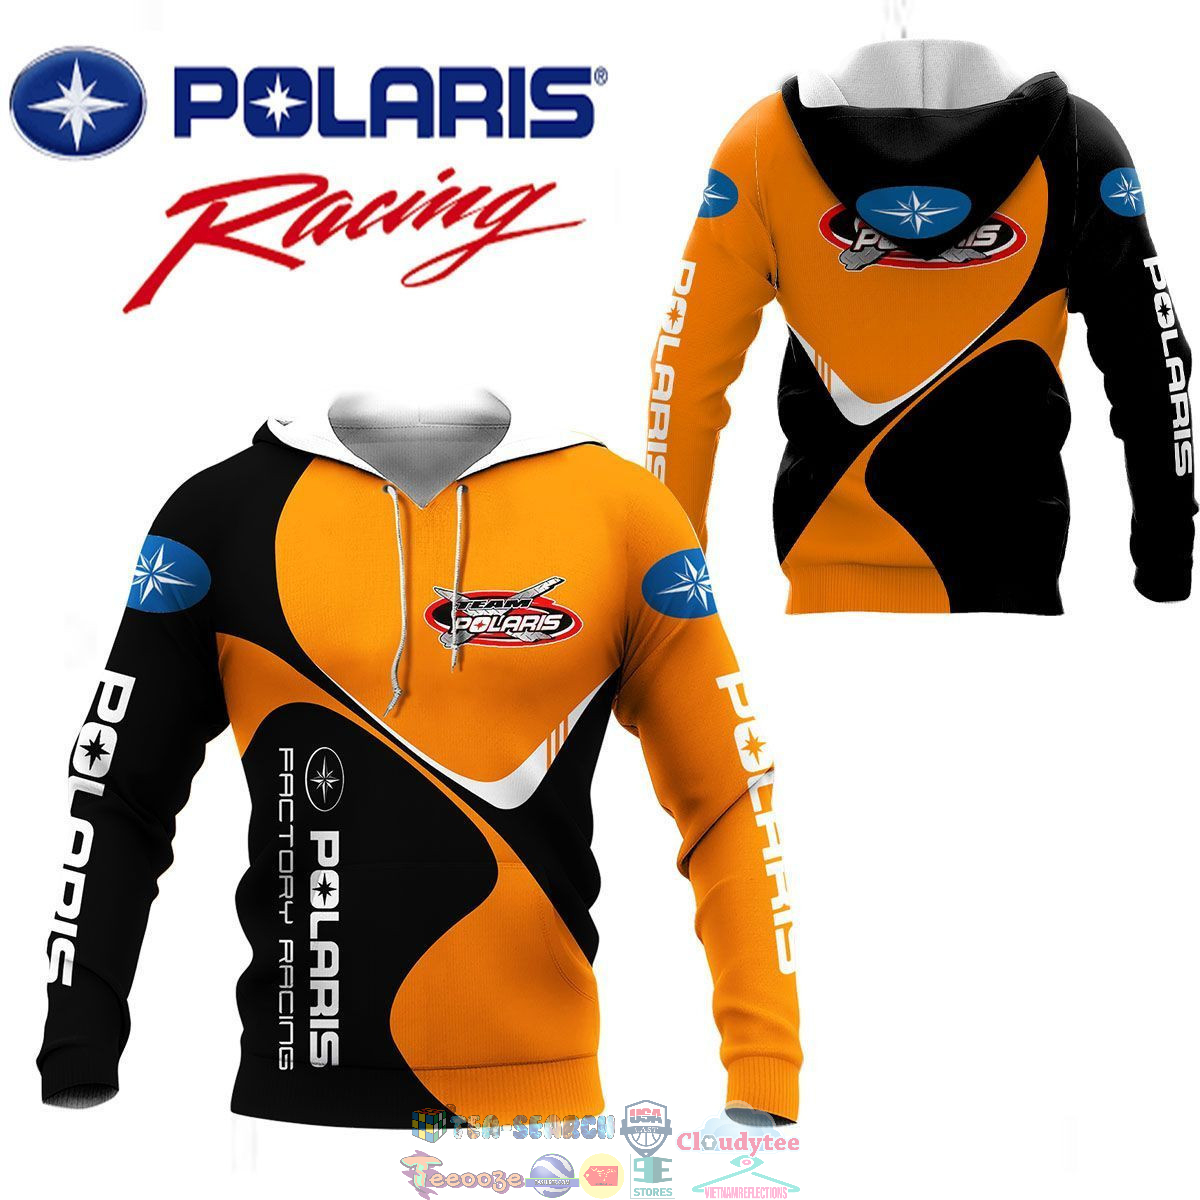 Polaris Factory Racing Orange 3D hoodie and t-shirt